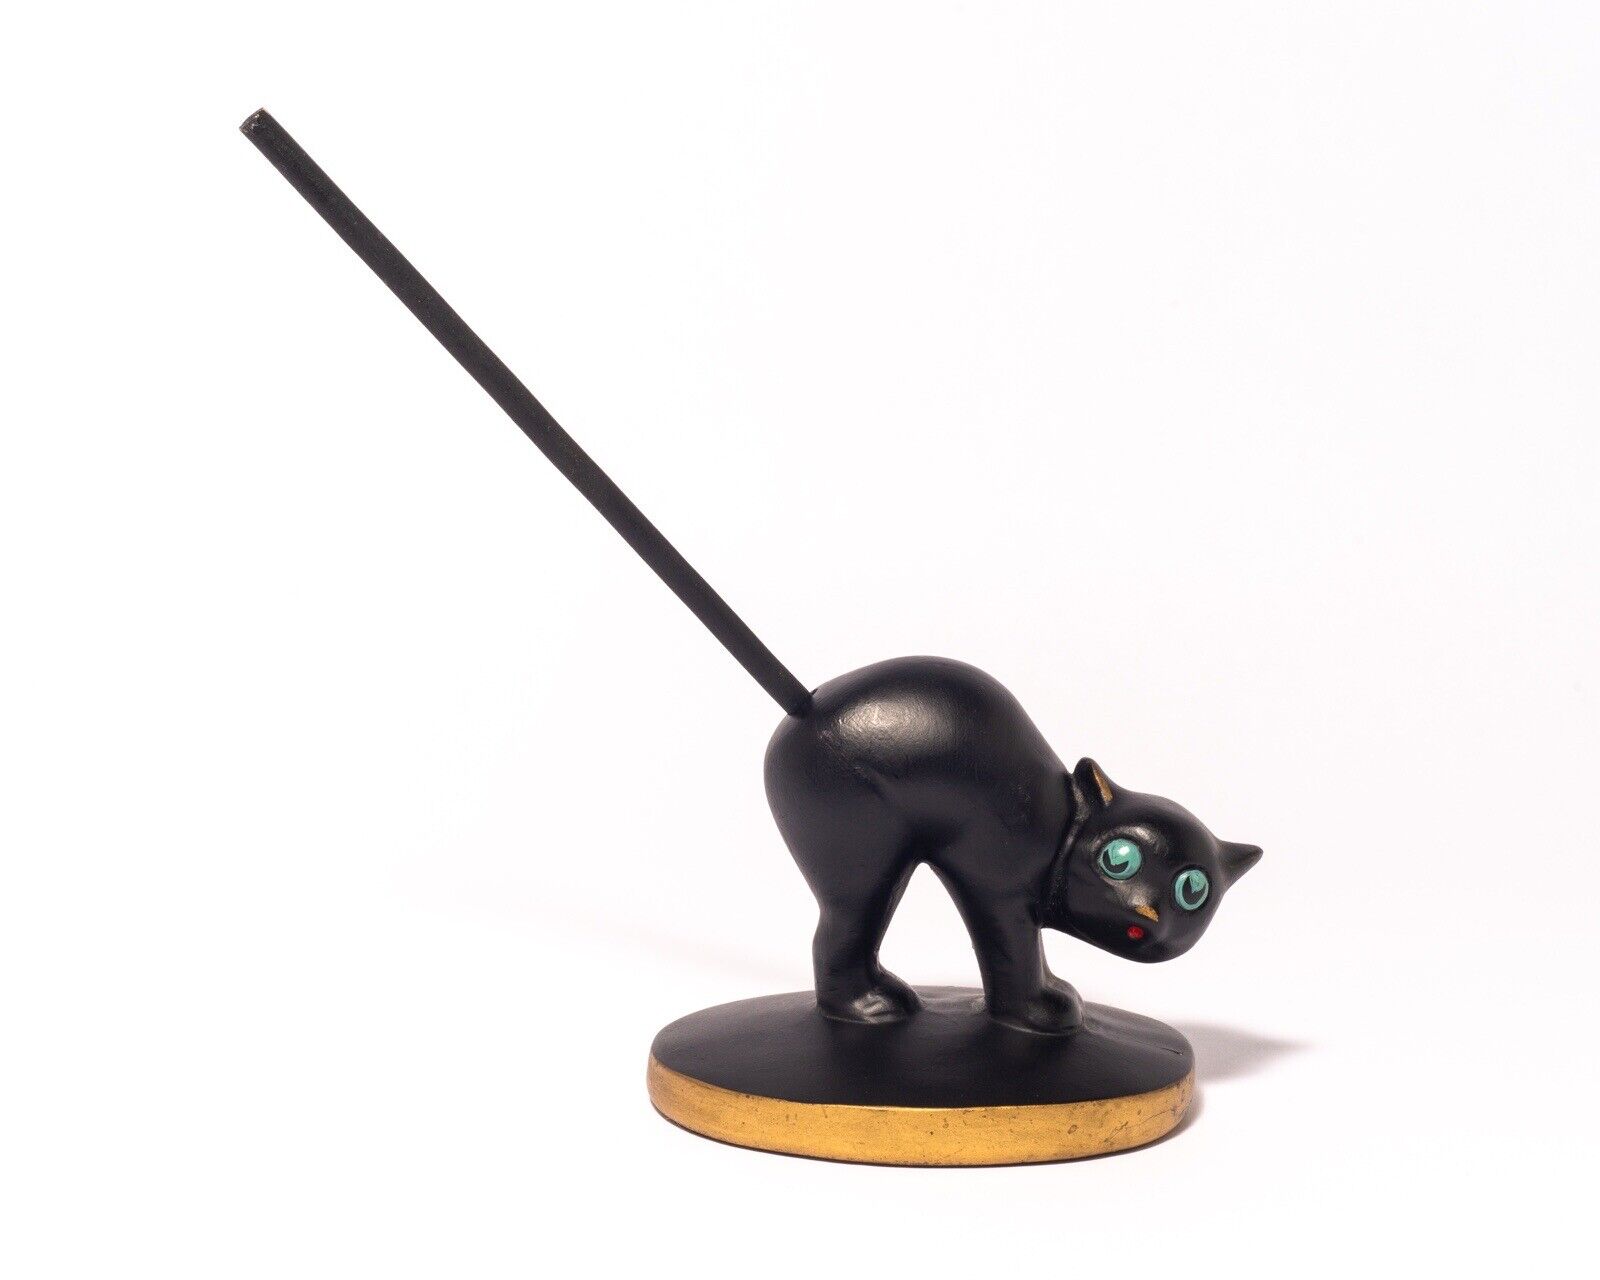 Vintage ABCO Black Spooky Cat Pen Holder, Chalkware, Desk Accessory, USA Made